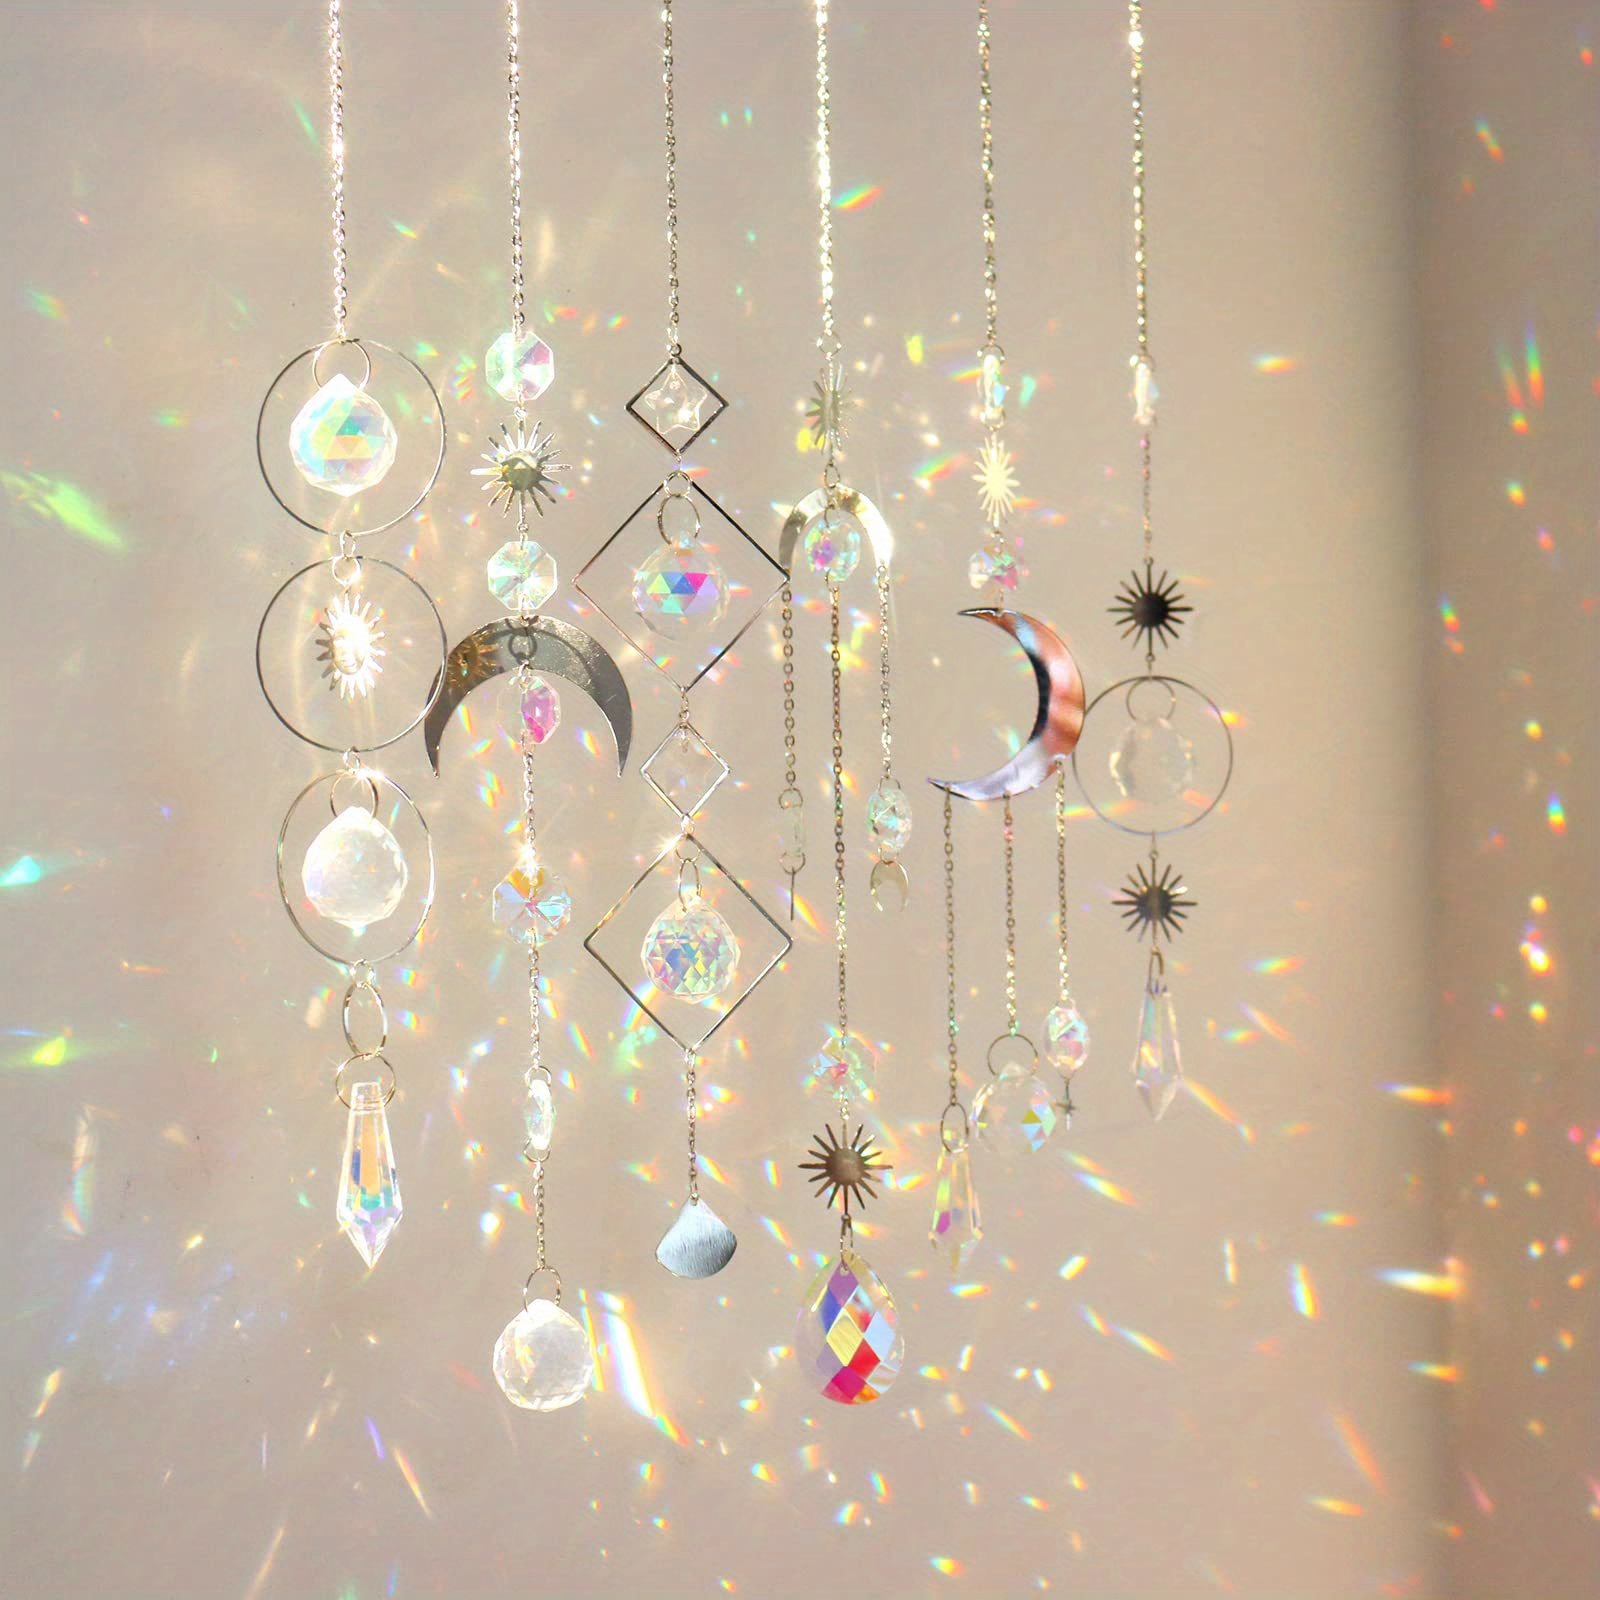 Hanging Crystals for Decoration Suncatcher Crystal Hanging 